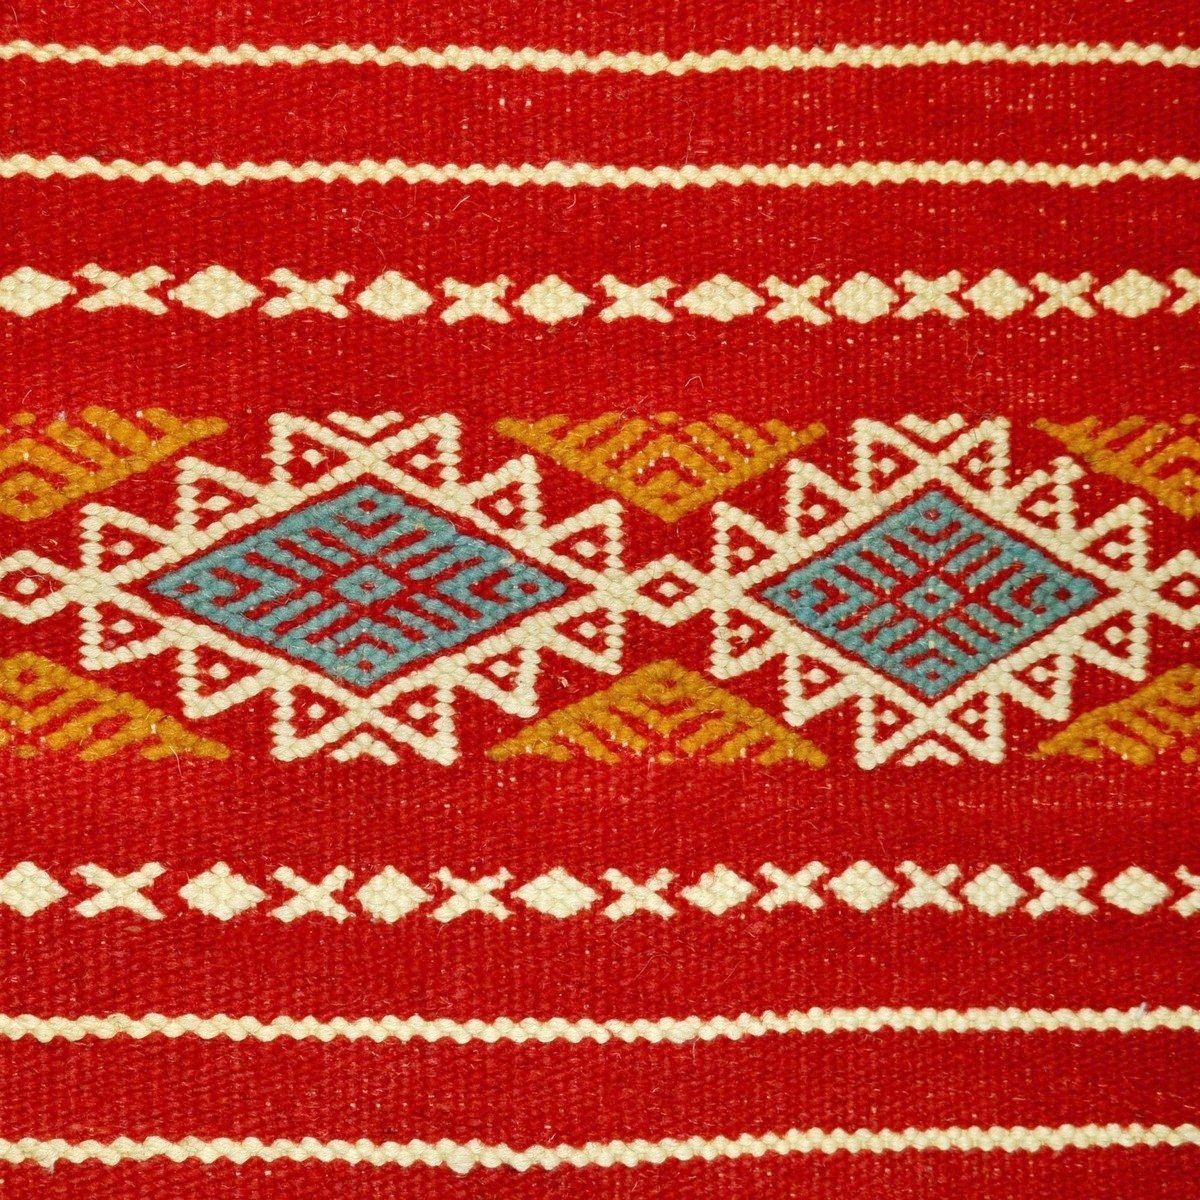 Berber tapijt Tapijt Kilim lang Mellassine 60x200 Rood (Handgeweven, Wol, Tunesië) Tunesisch kilimdeken, Marokkaanse stijl. Rech